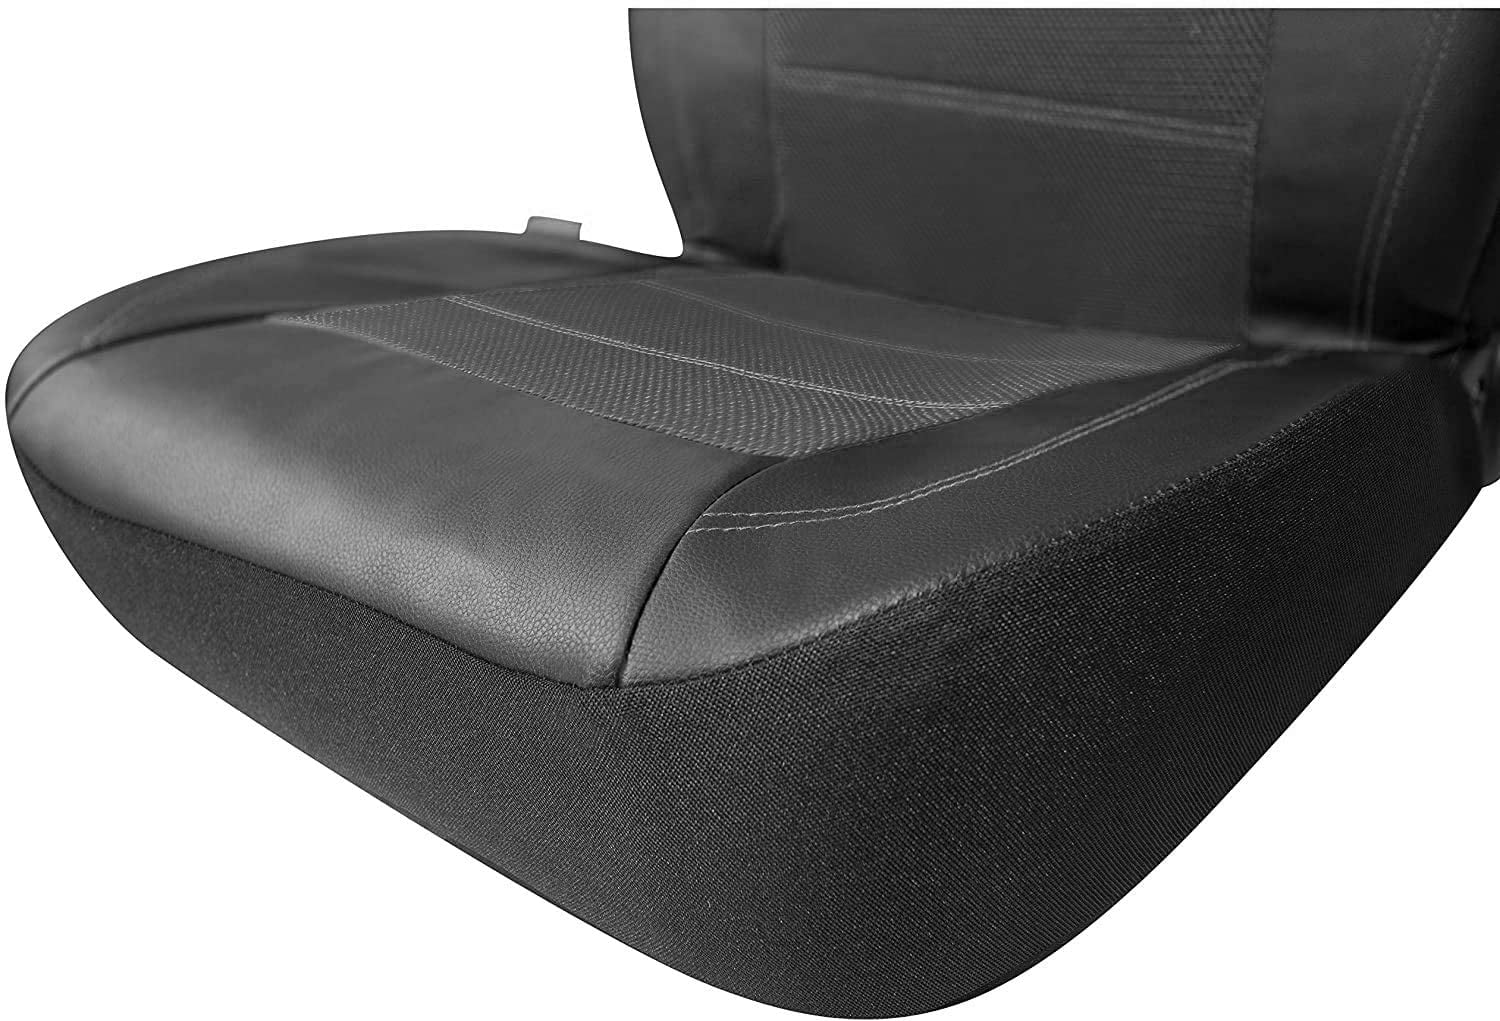 9pcs set gray car seat cover heat pressed thick foam seat cushion